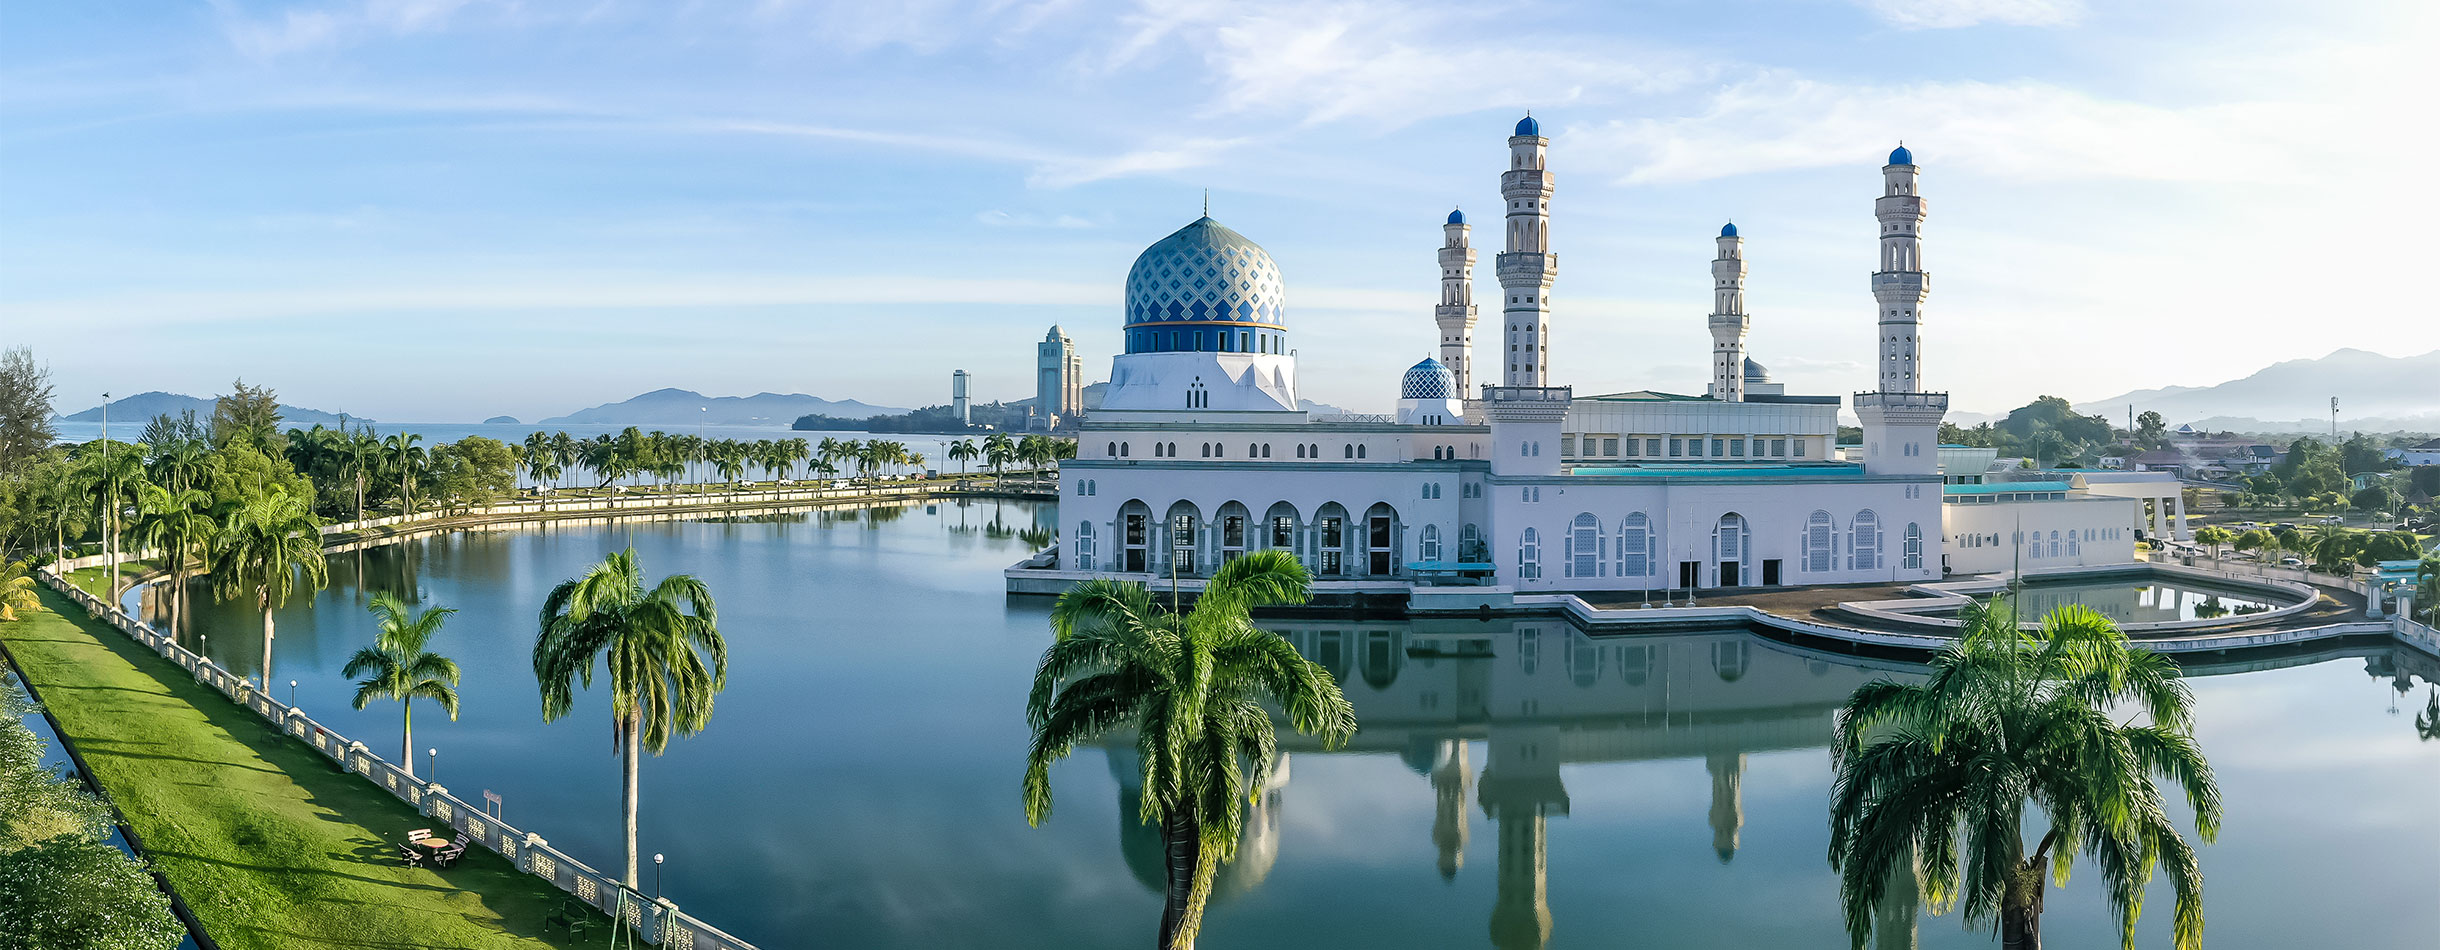 Kota Kinabula City floating mosque